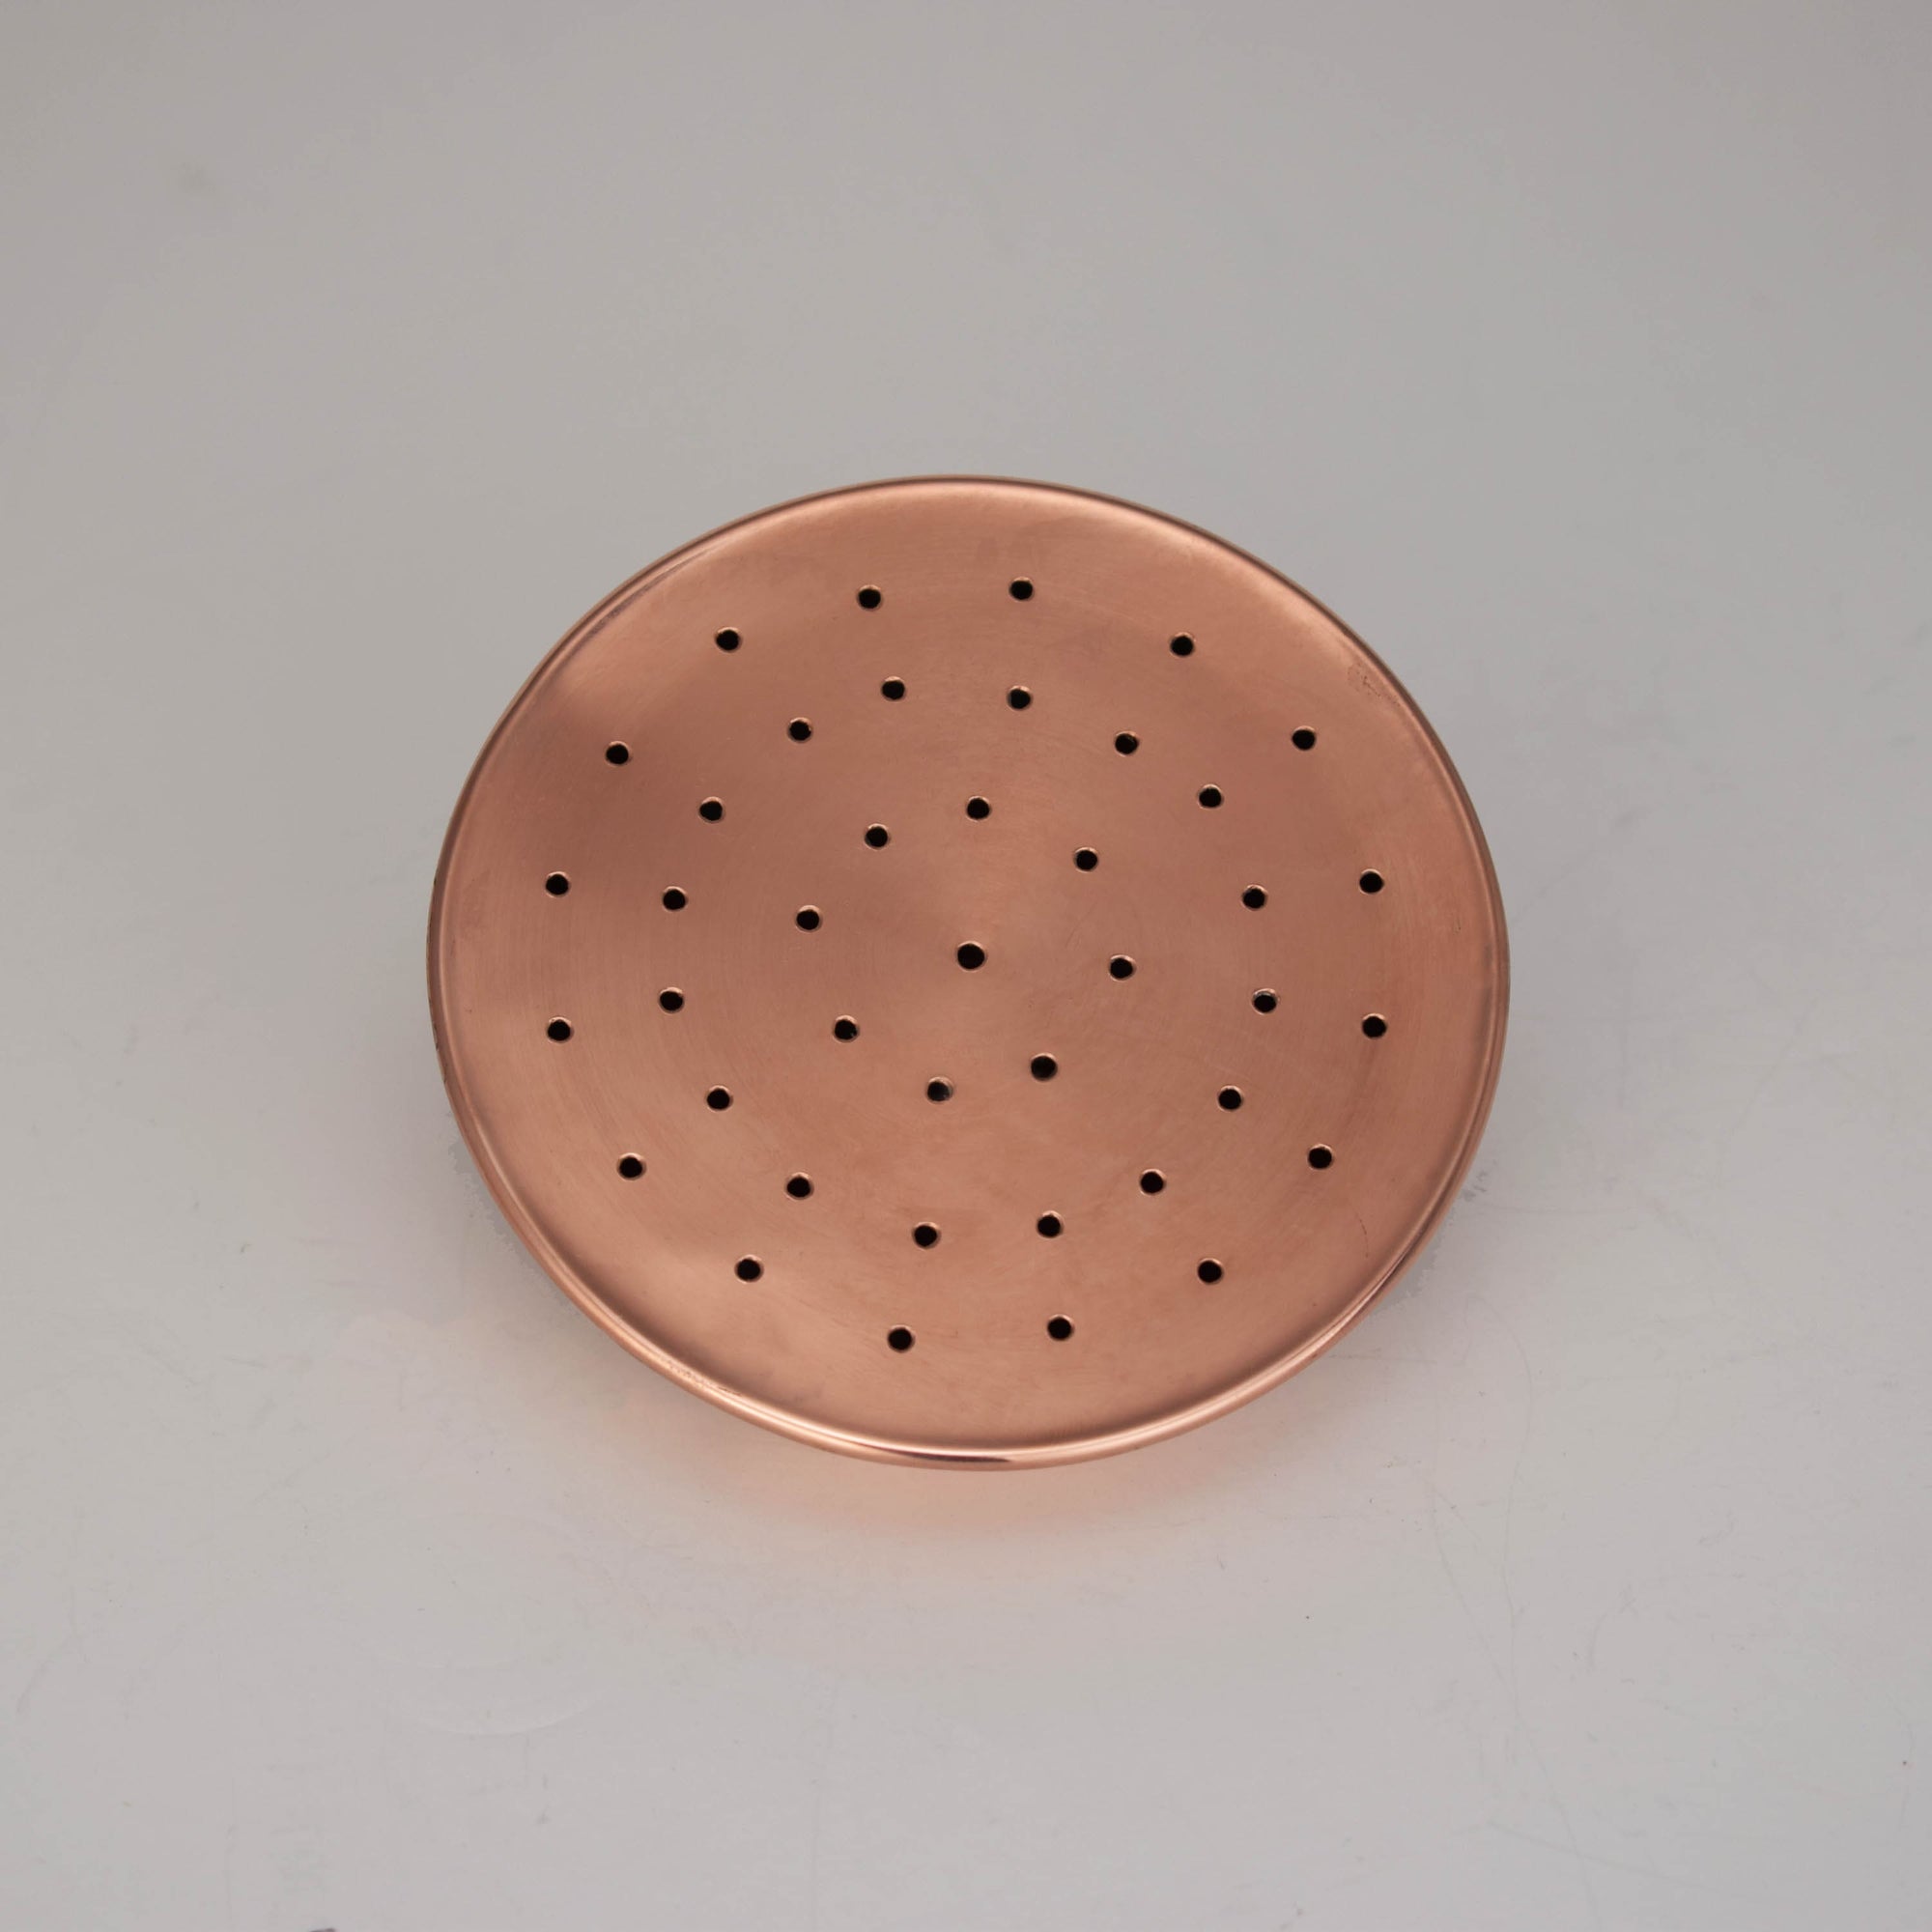 Copper Shower Head - Small Shower Rose - Proper Copper Design handmade